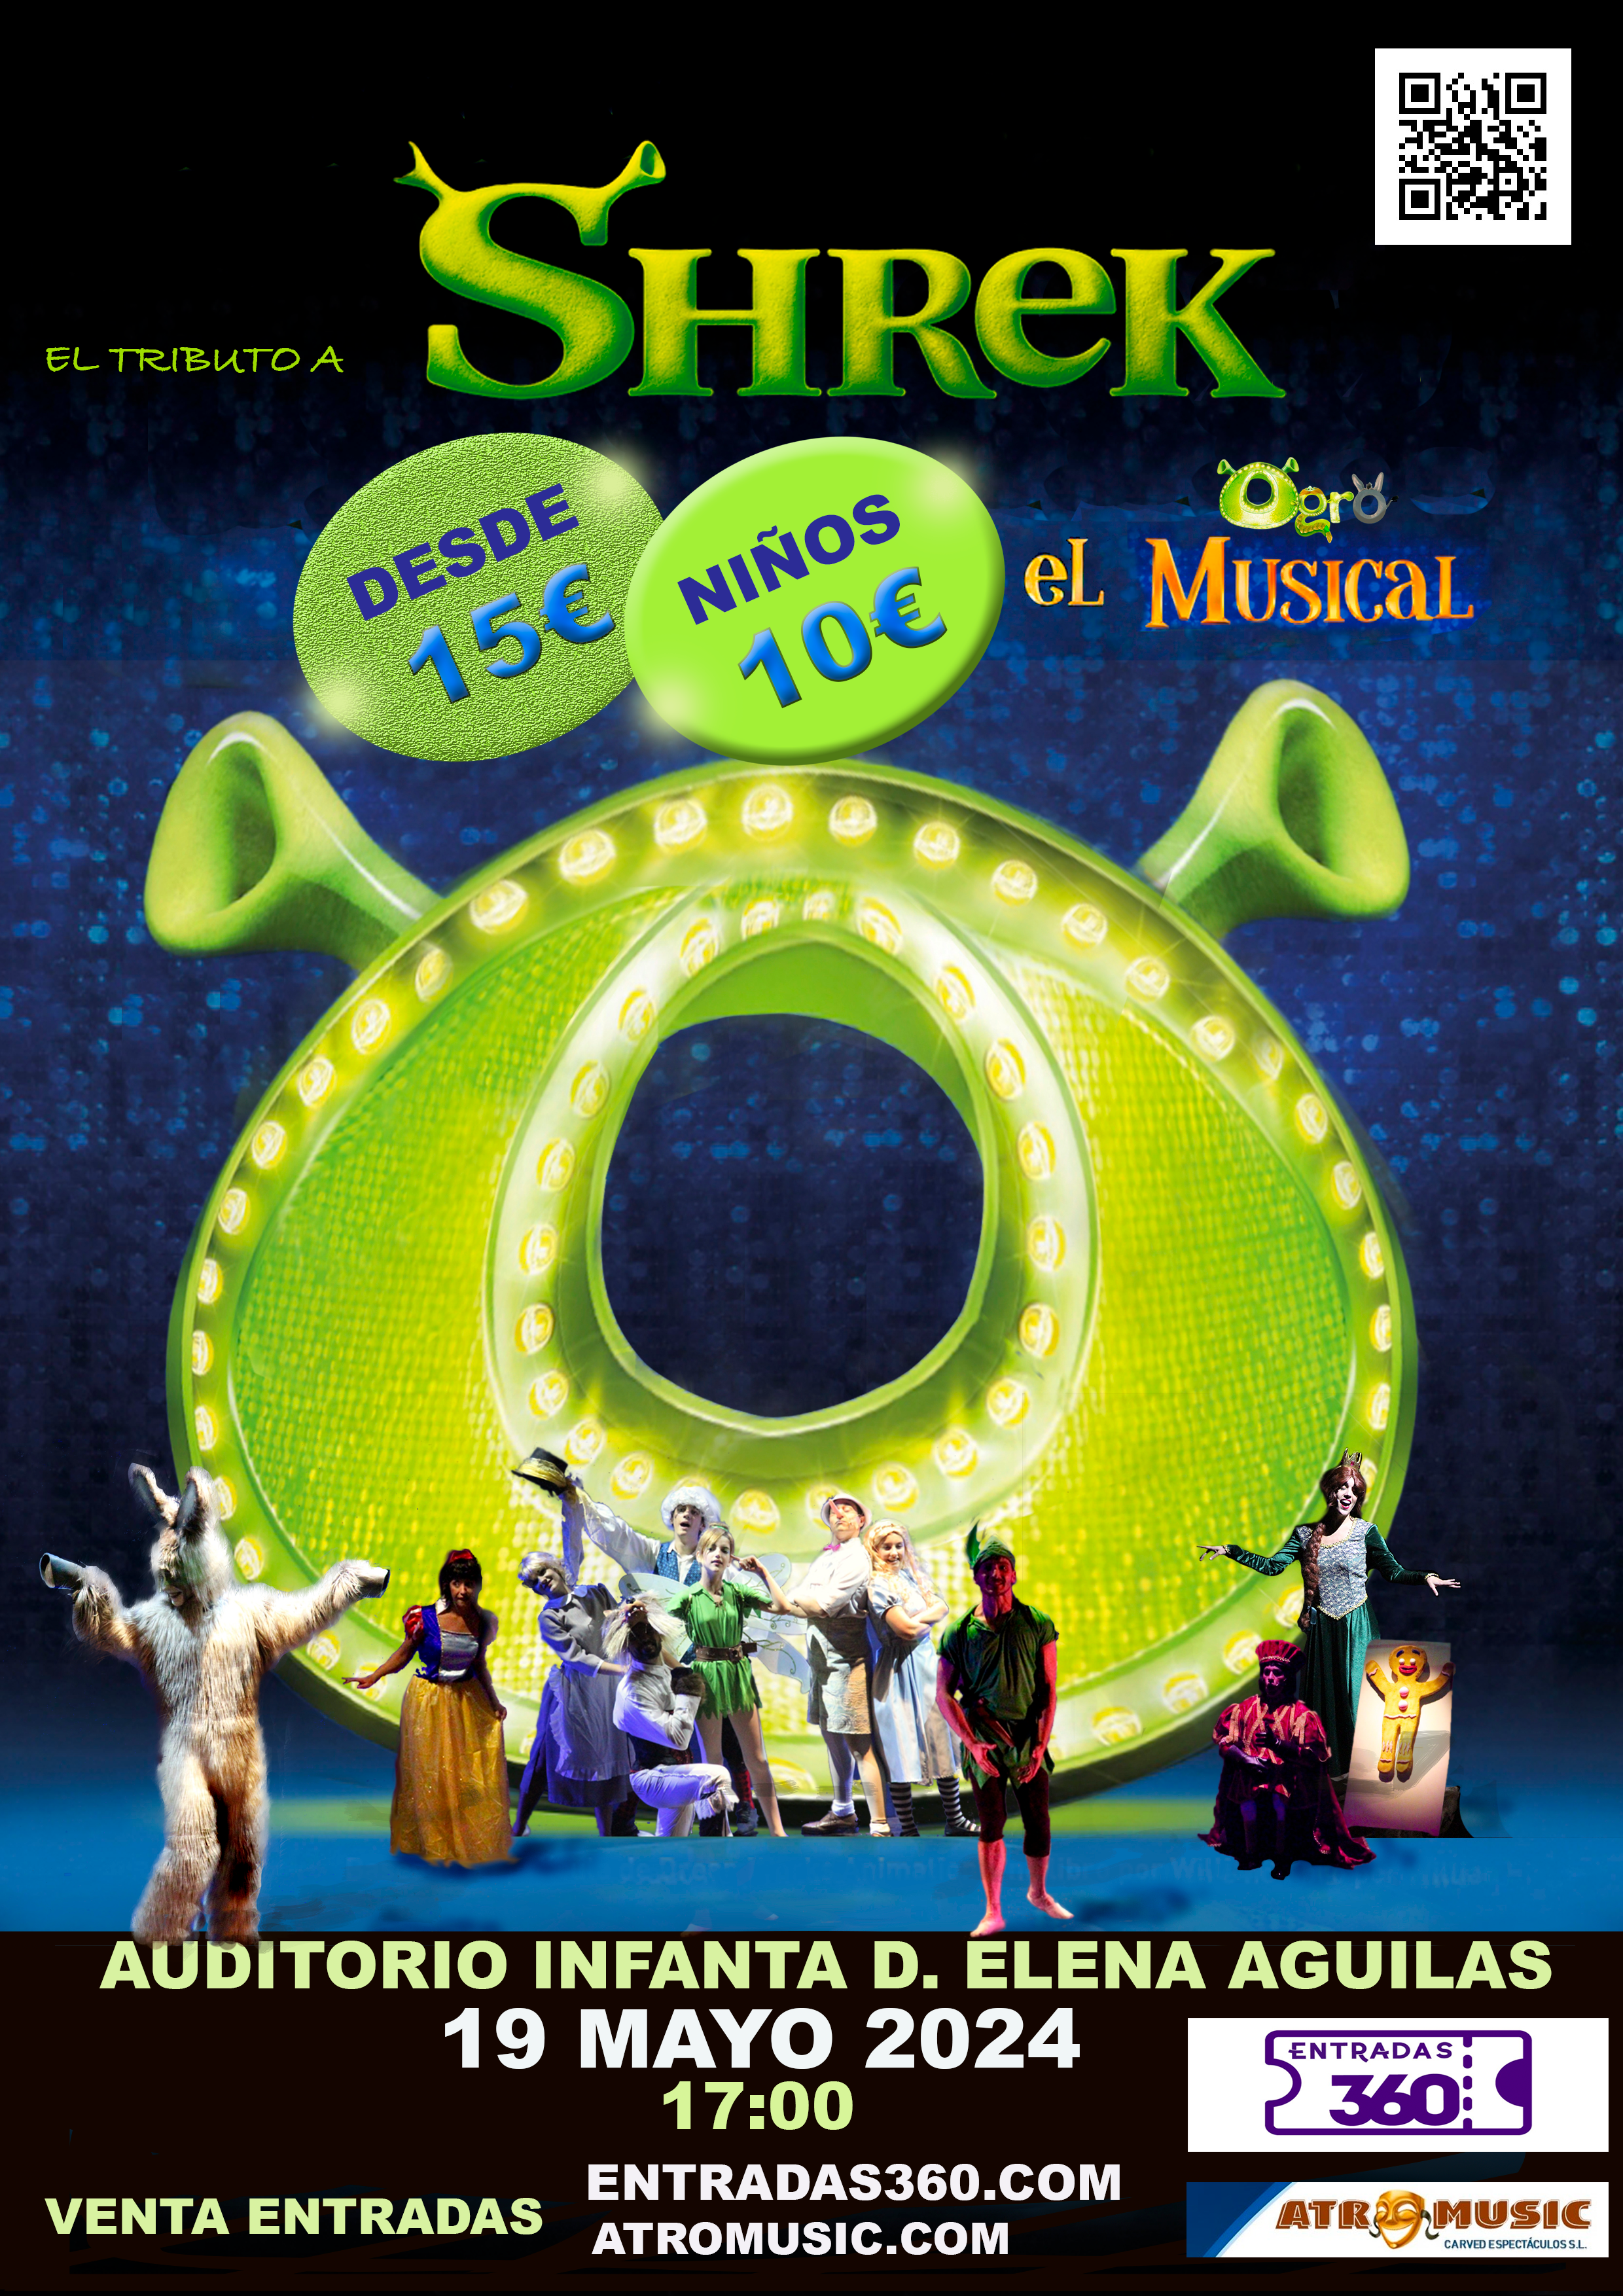 Ogro, el musical.